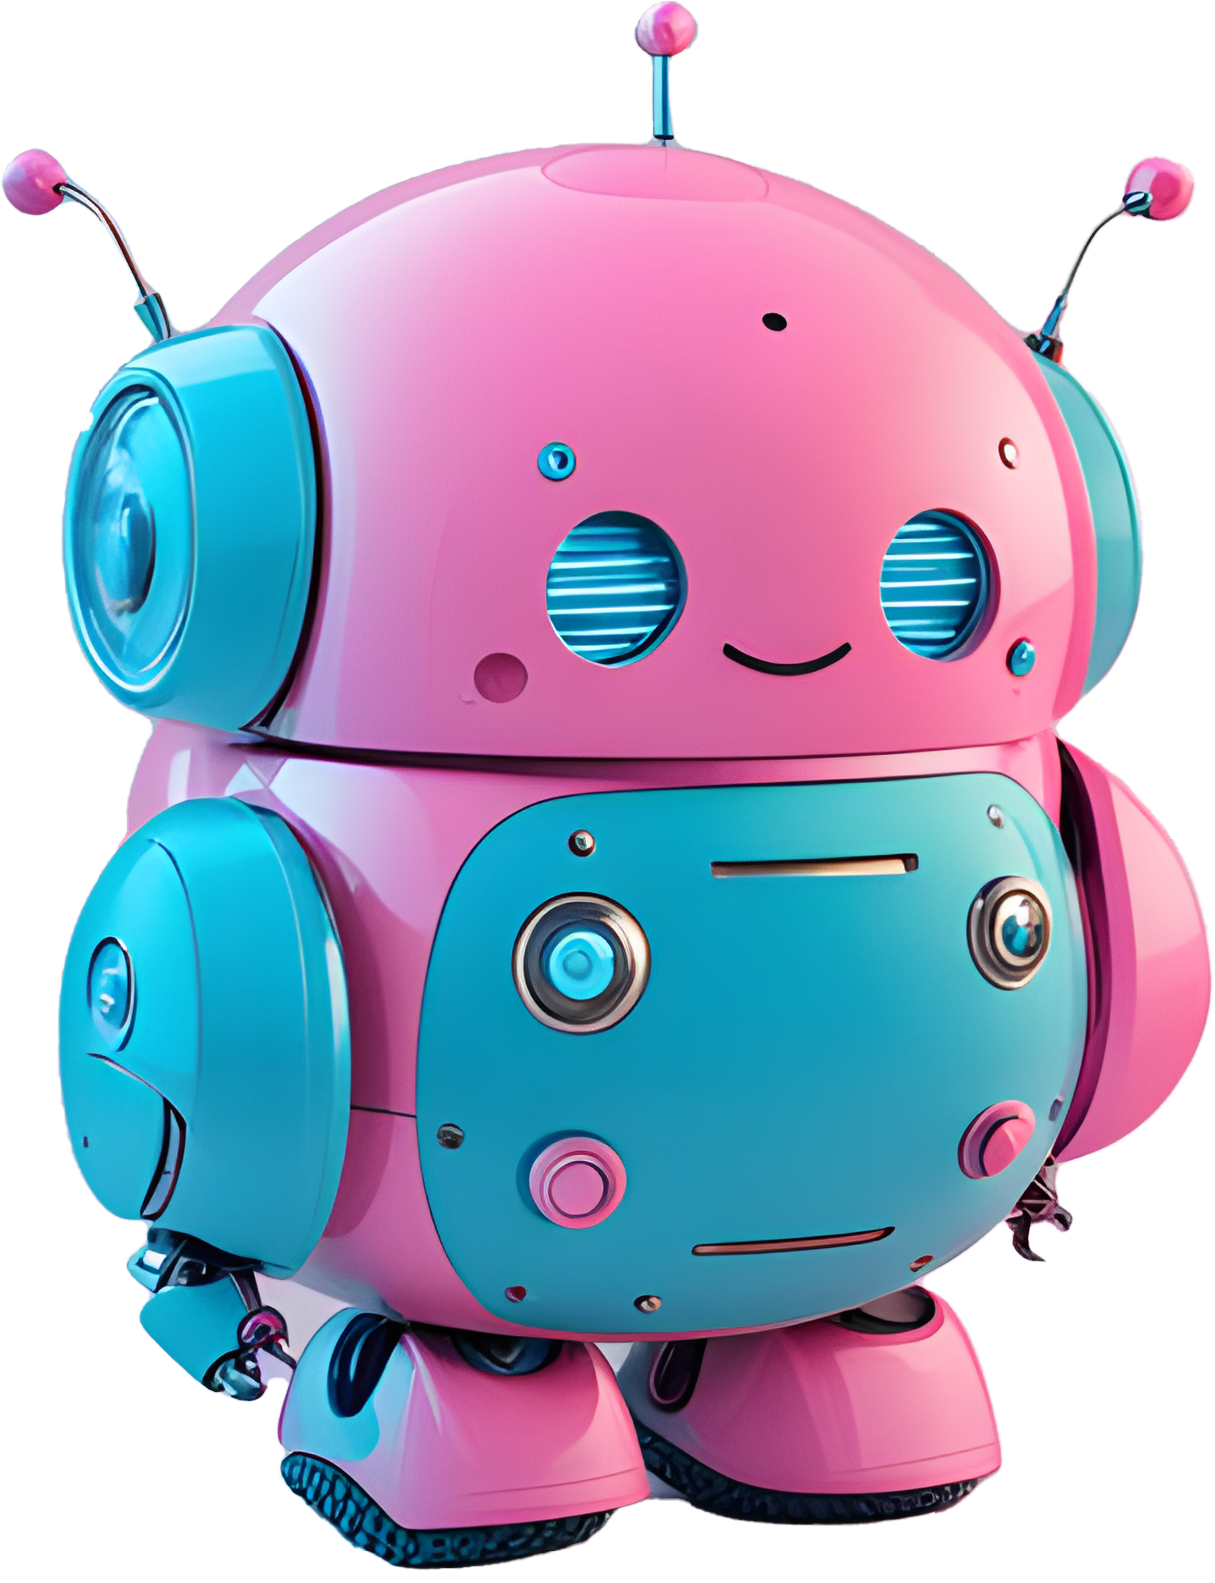 cute robot named "Webico"